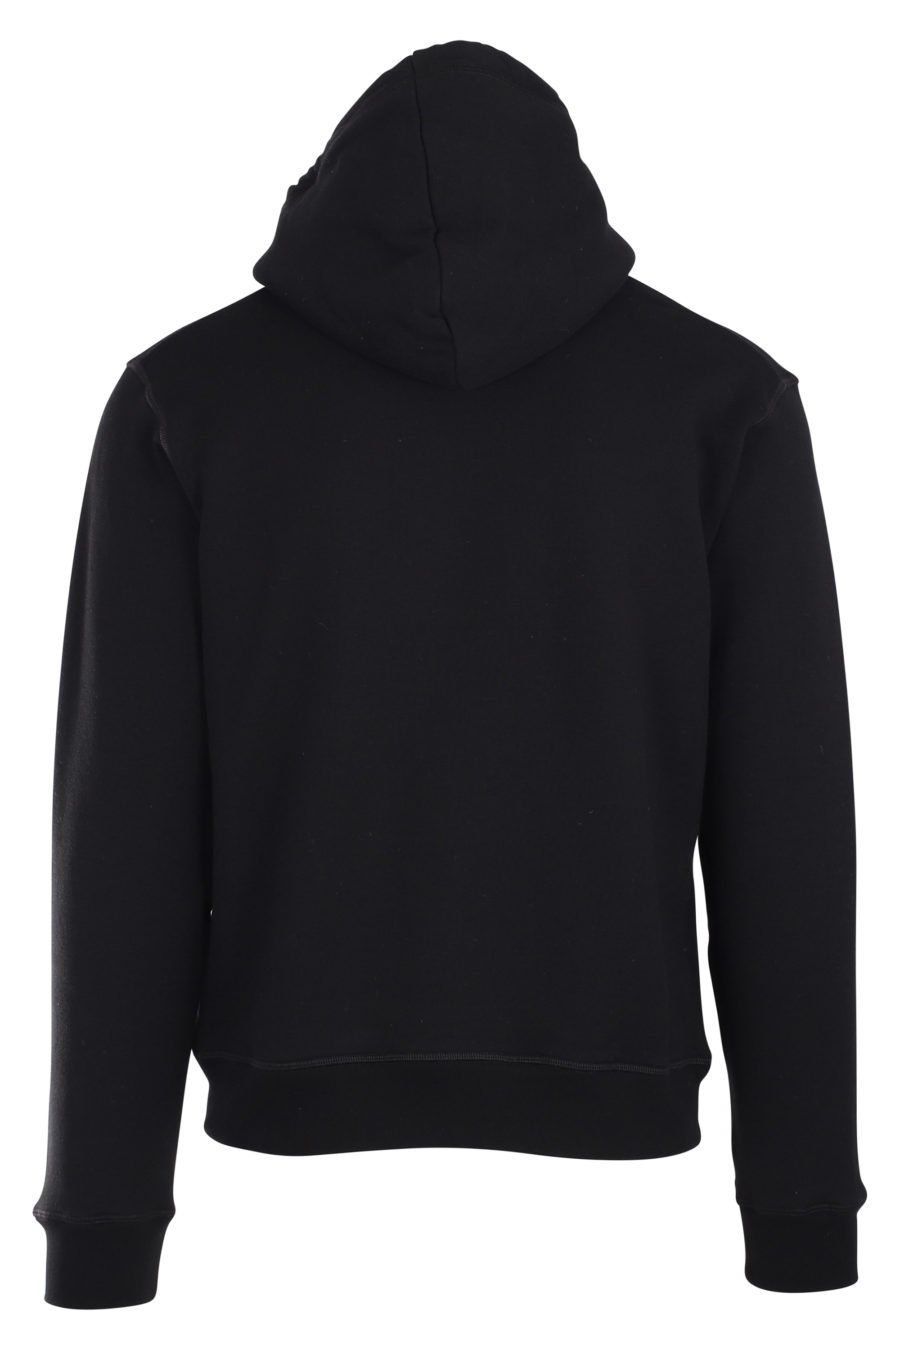 Black sweatshirt with hood and logo ceresio 9 - IMG 9894